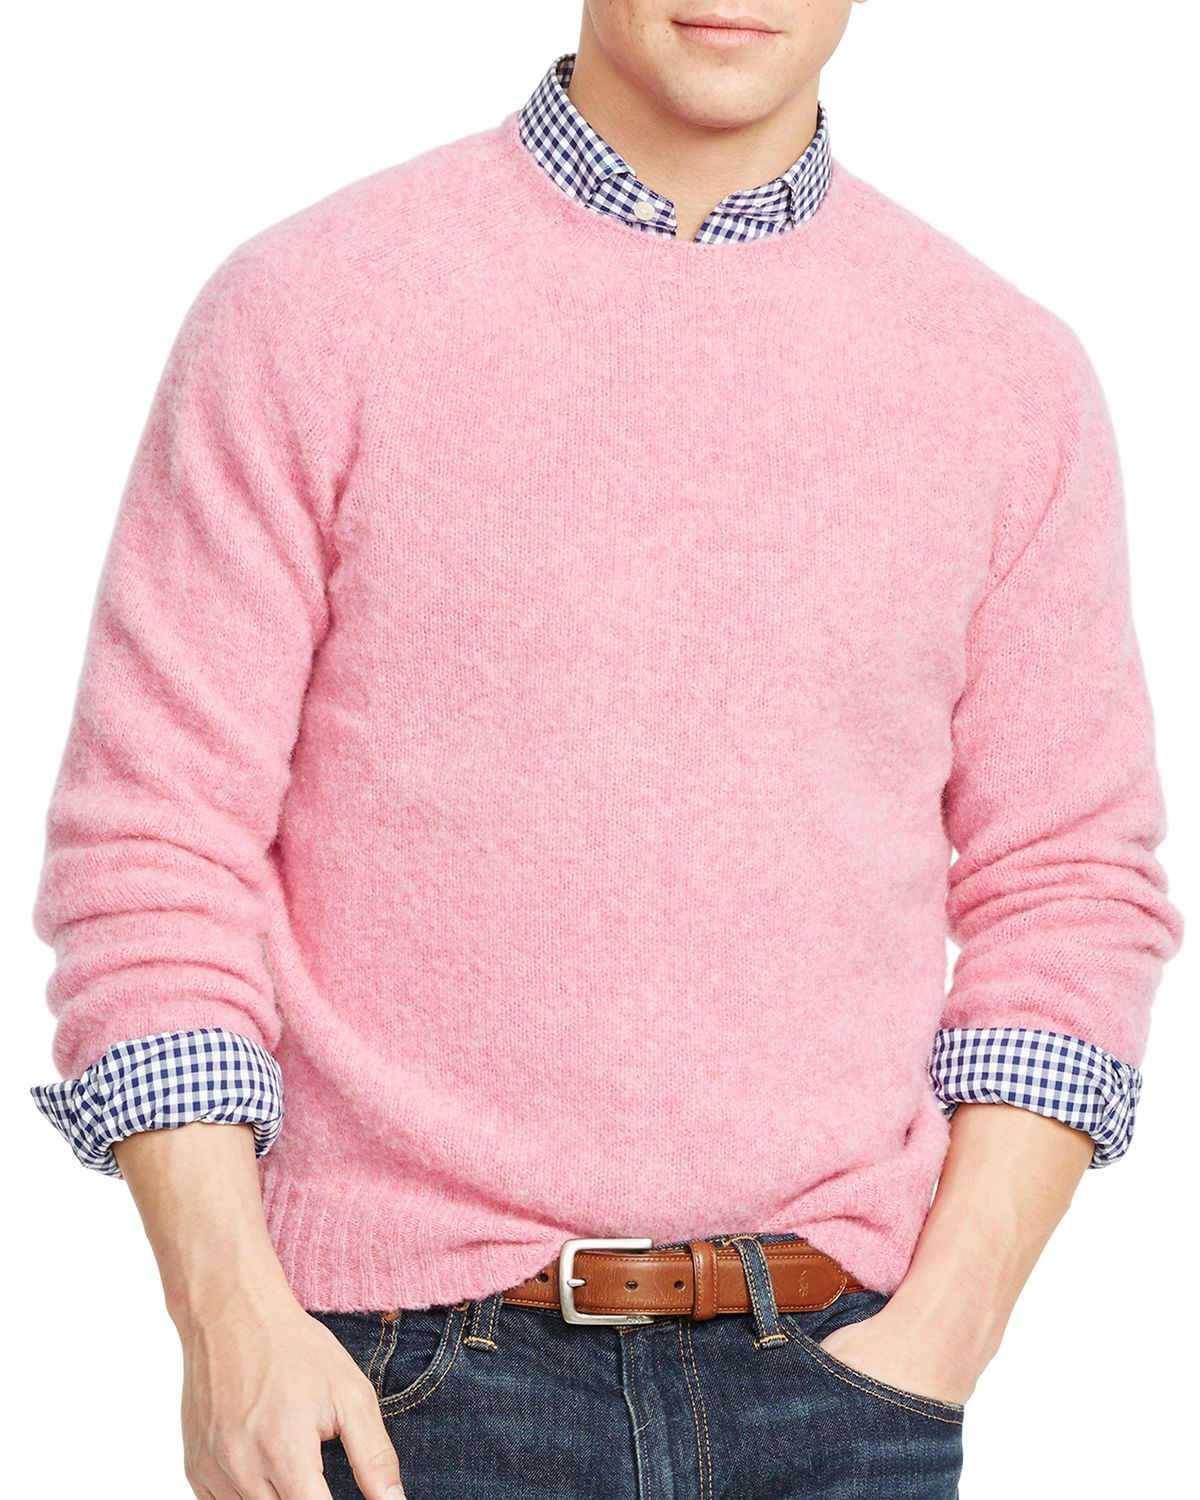 Lyst - Ralph lauren Polo Wool-cashmere Crewneck Sweater in Purple for Men